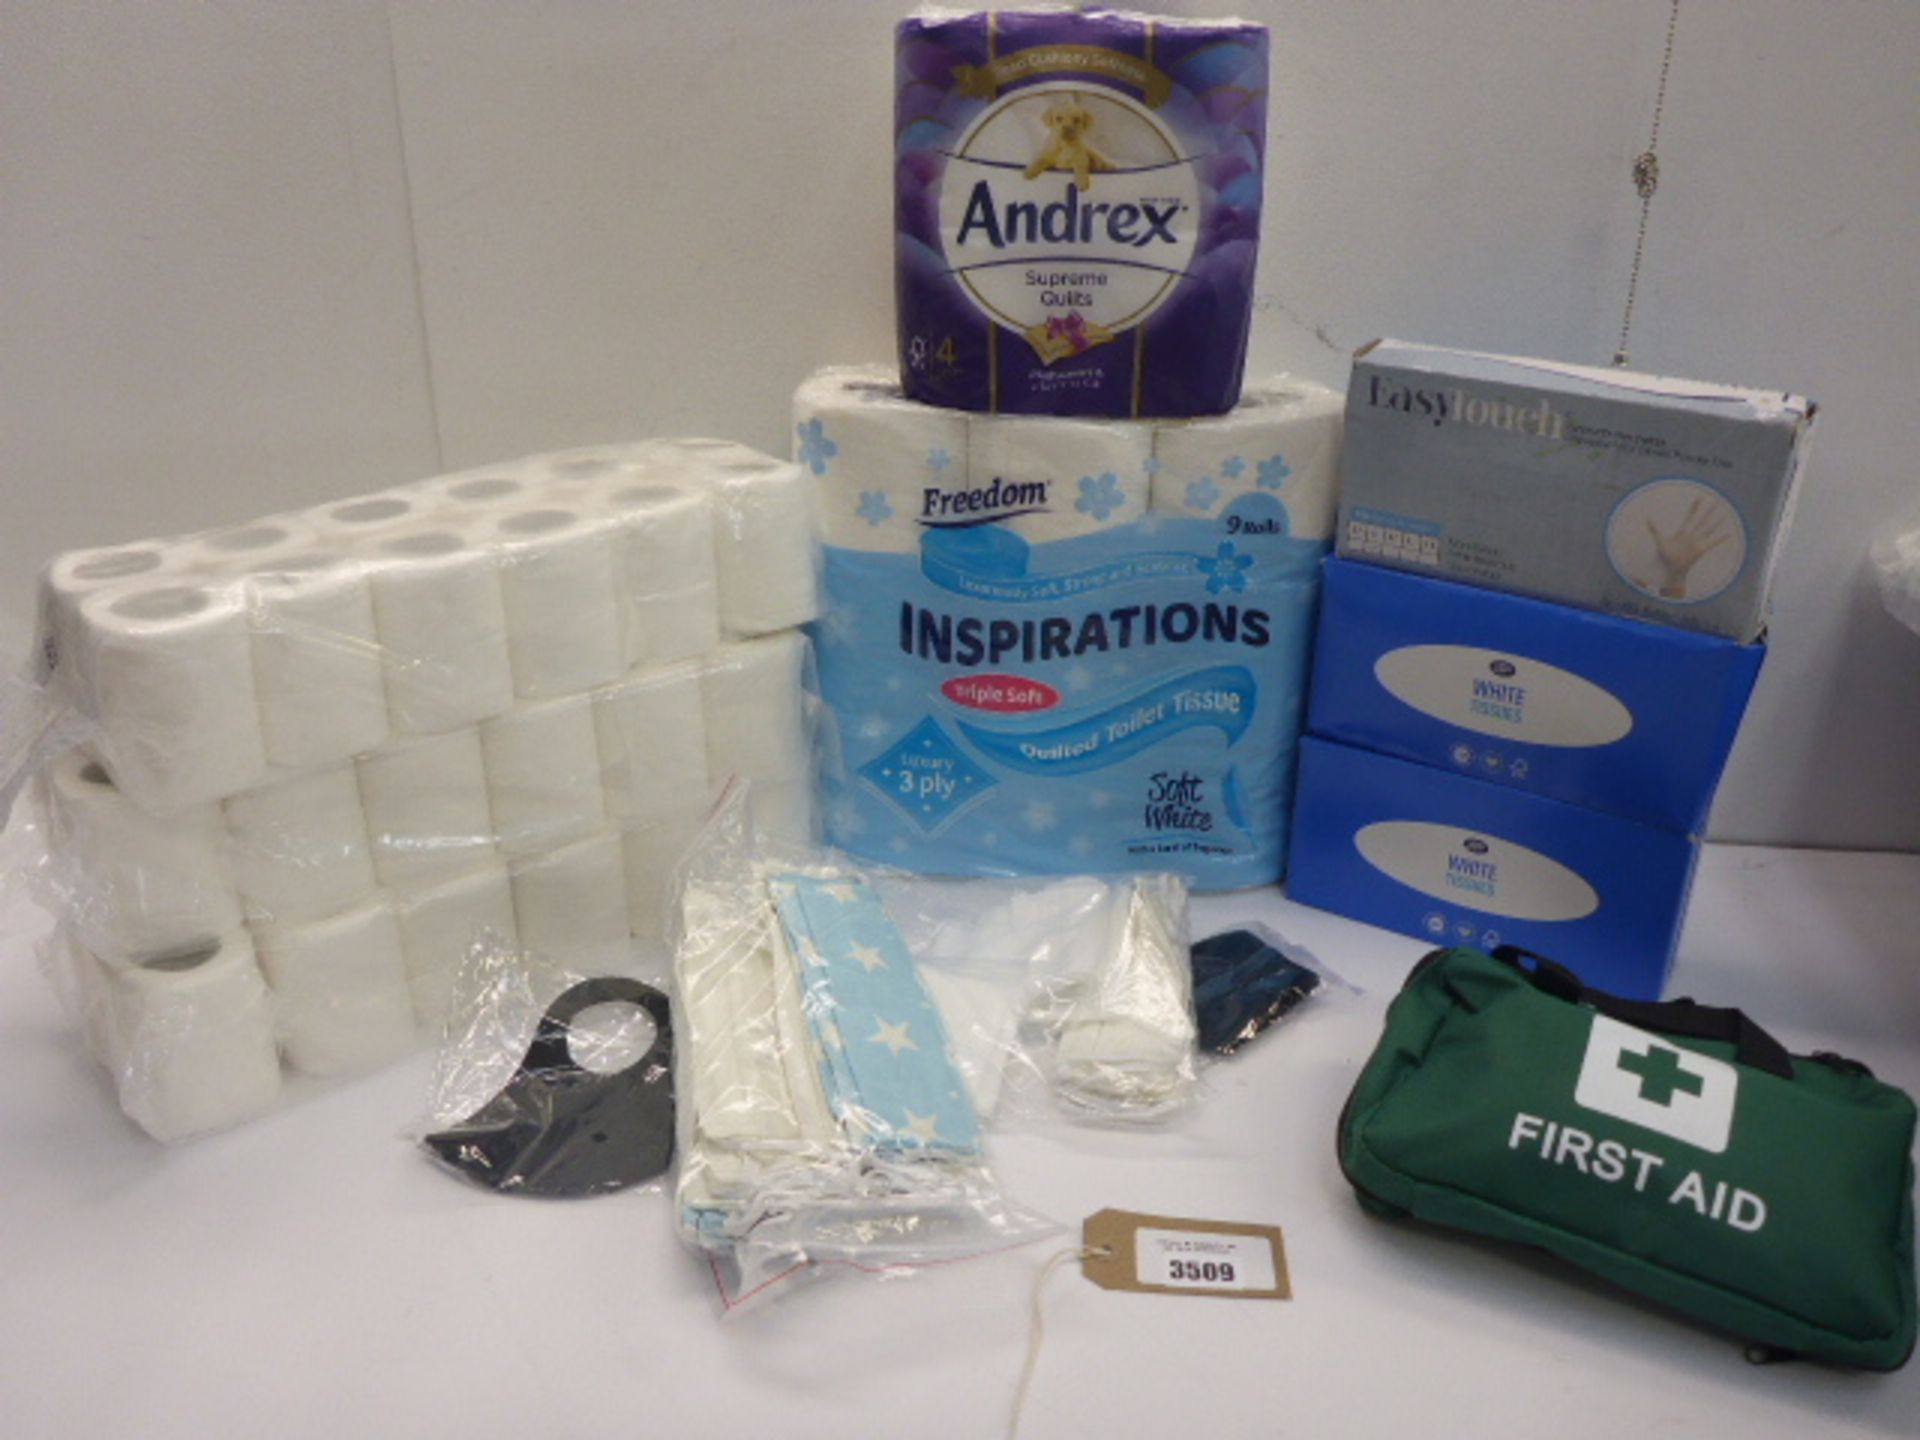 Andrew, Inspiration and other toilet roll packs, 2 packs white tissues, Disposable vinyl gloves,